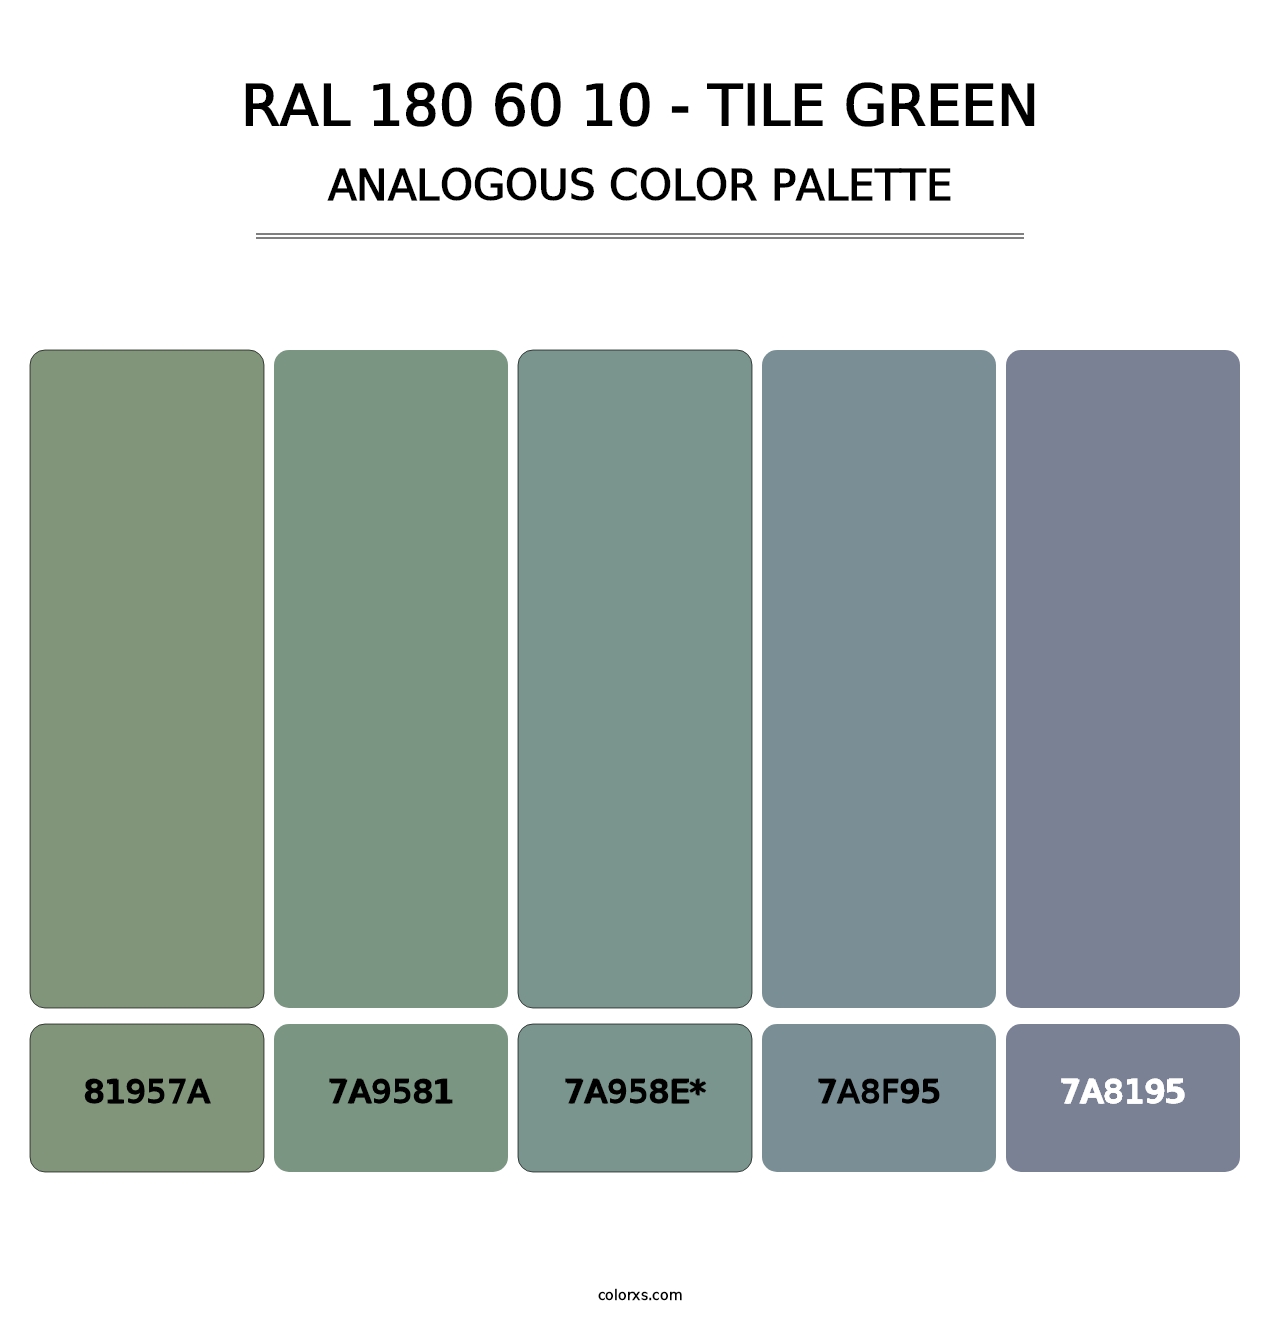 RAL 180 60 10 - Tile Green - Analogous Color Palette